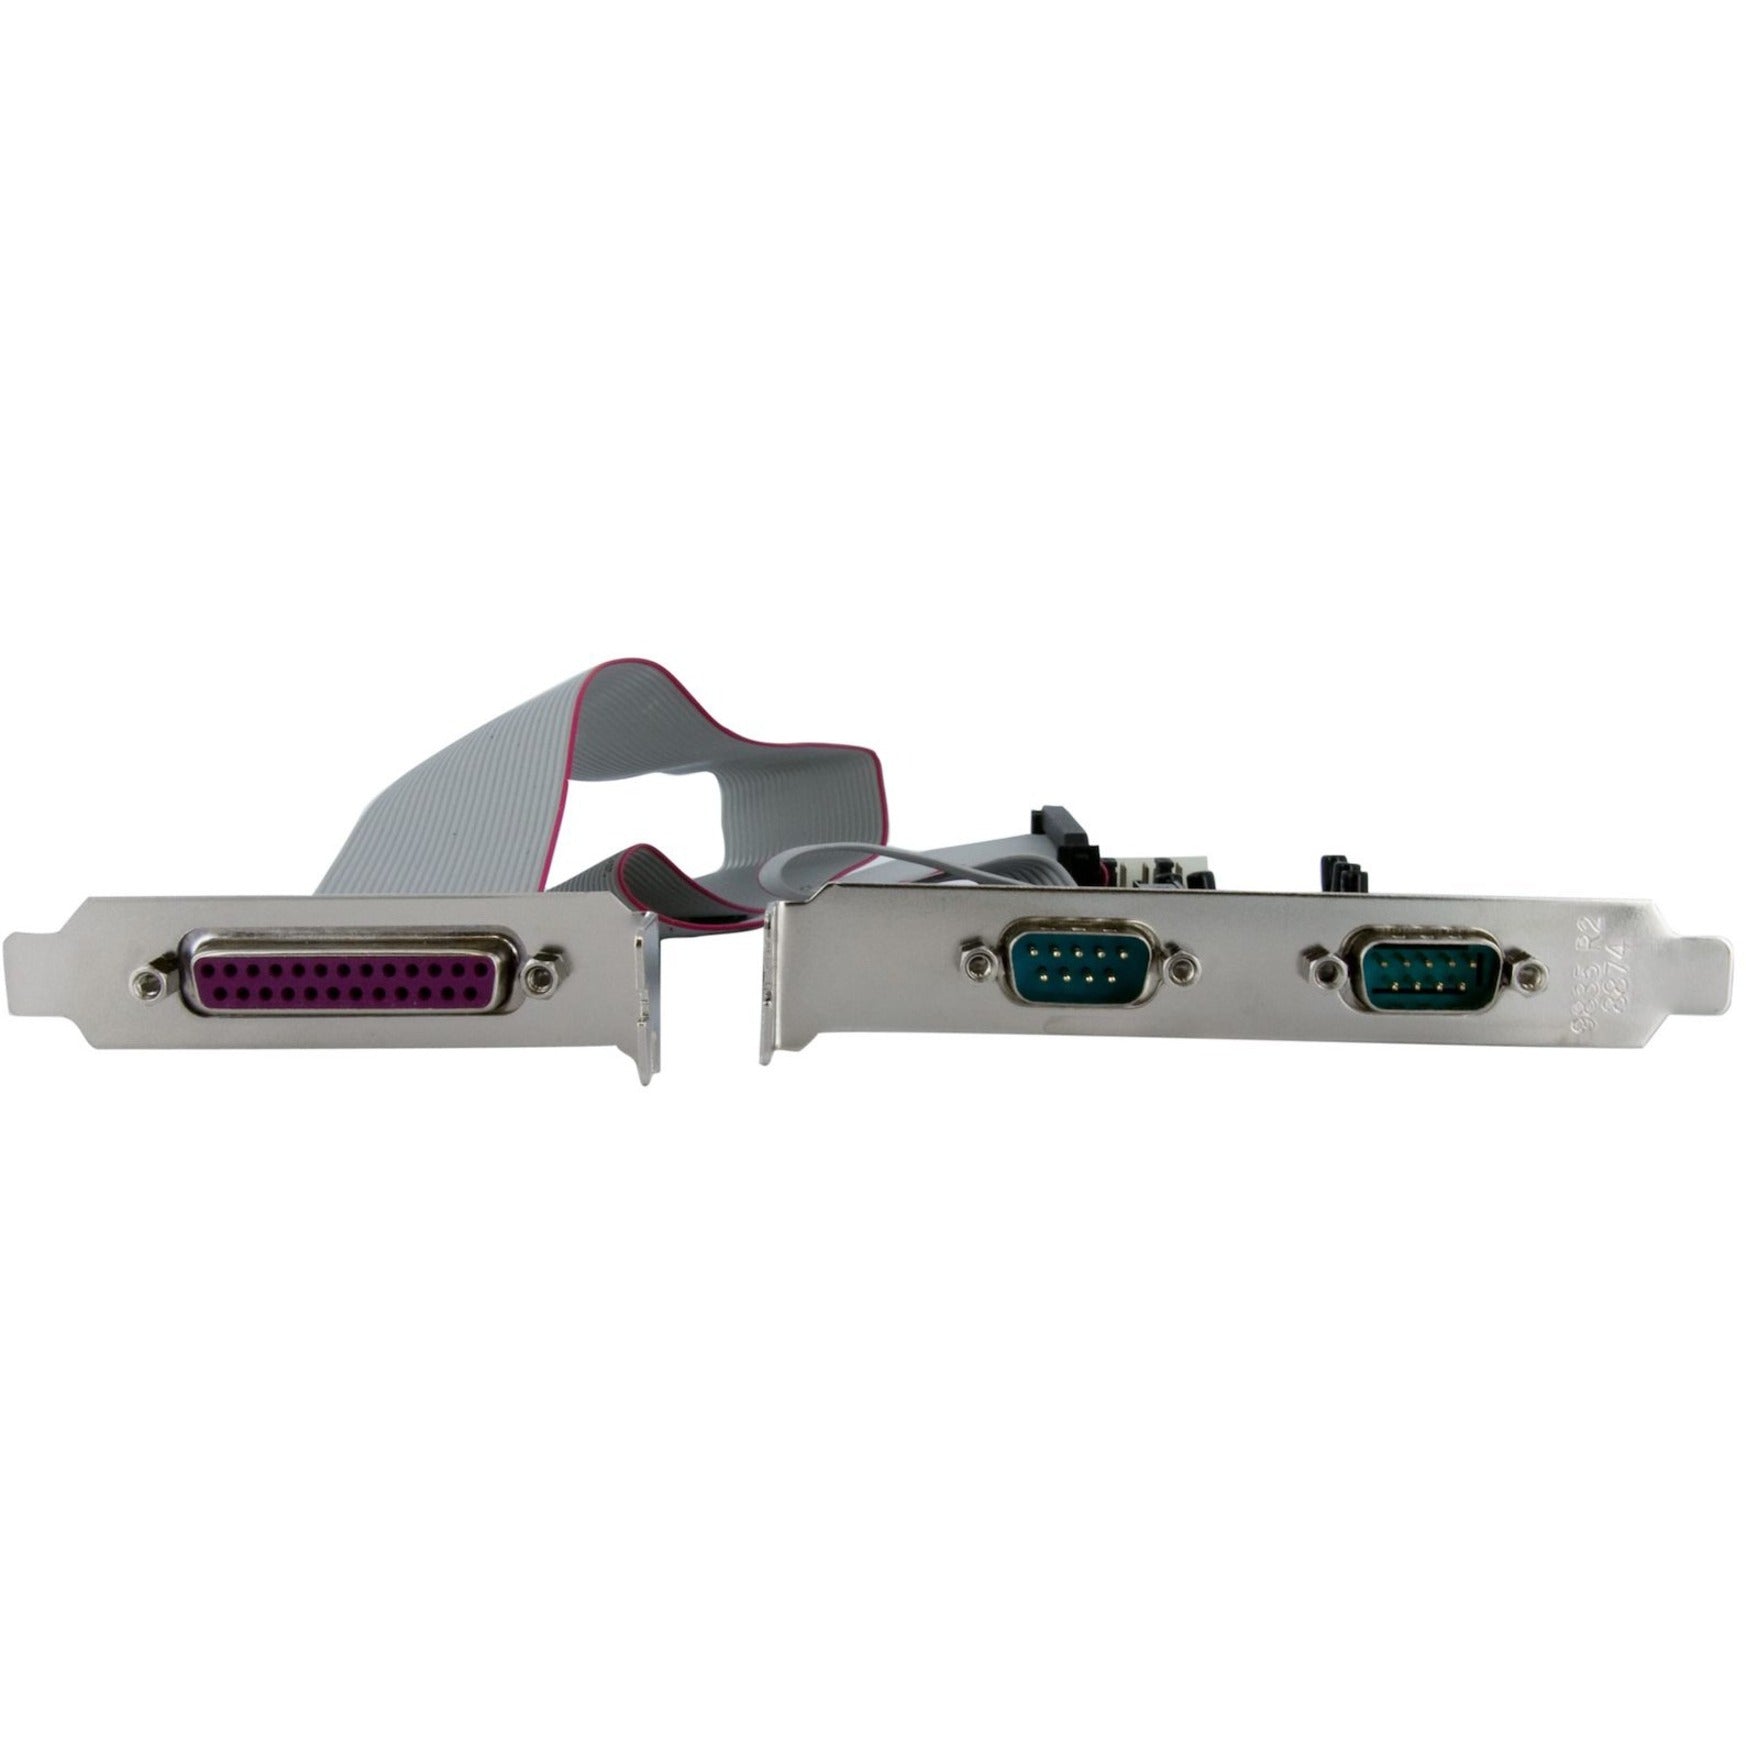 StarTech.com PEX2S5531P 2S1P PCIe Parallel Serial Combo Card, Native PCI Express, 16550 UART, Low Profile Brackets